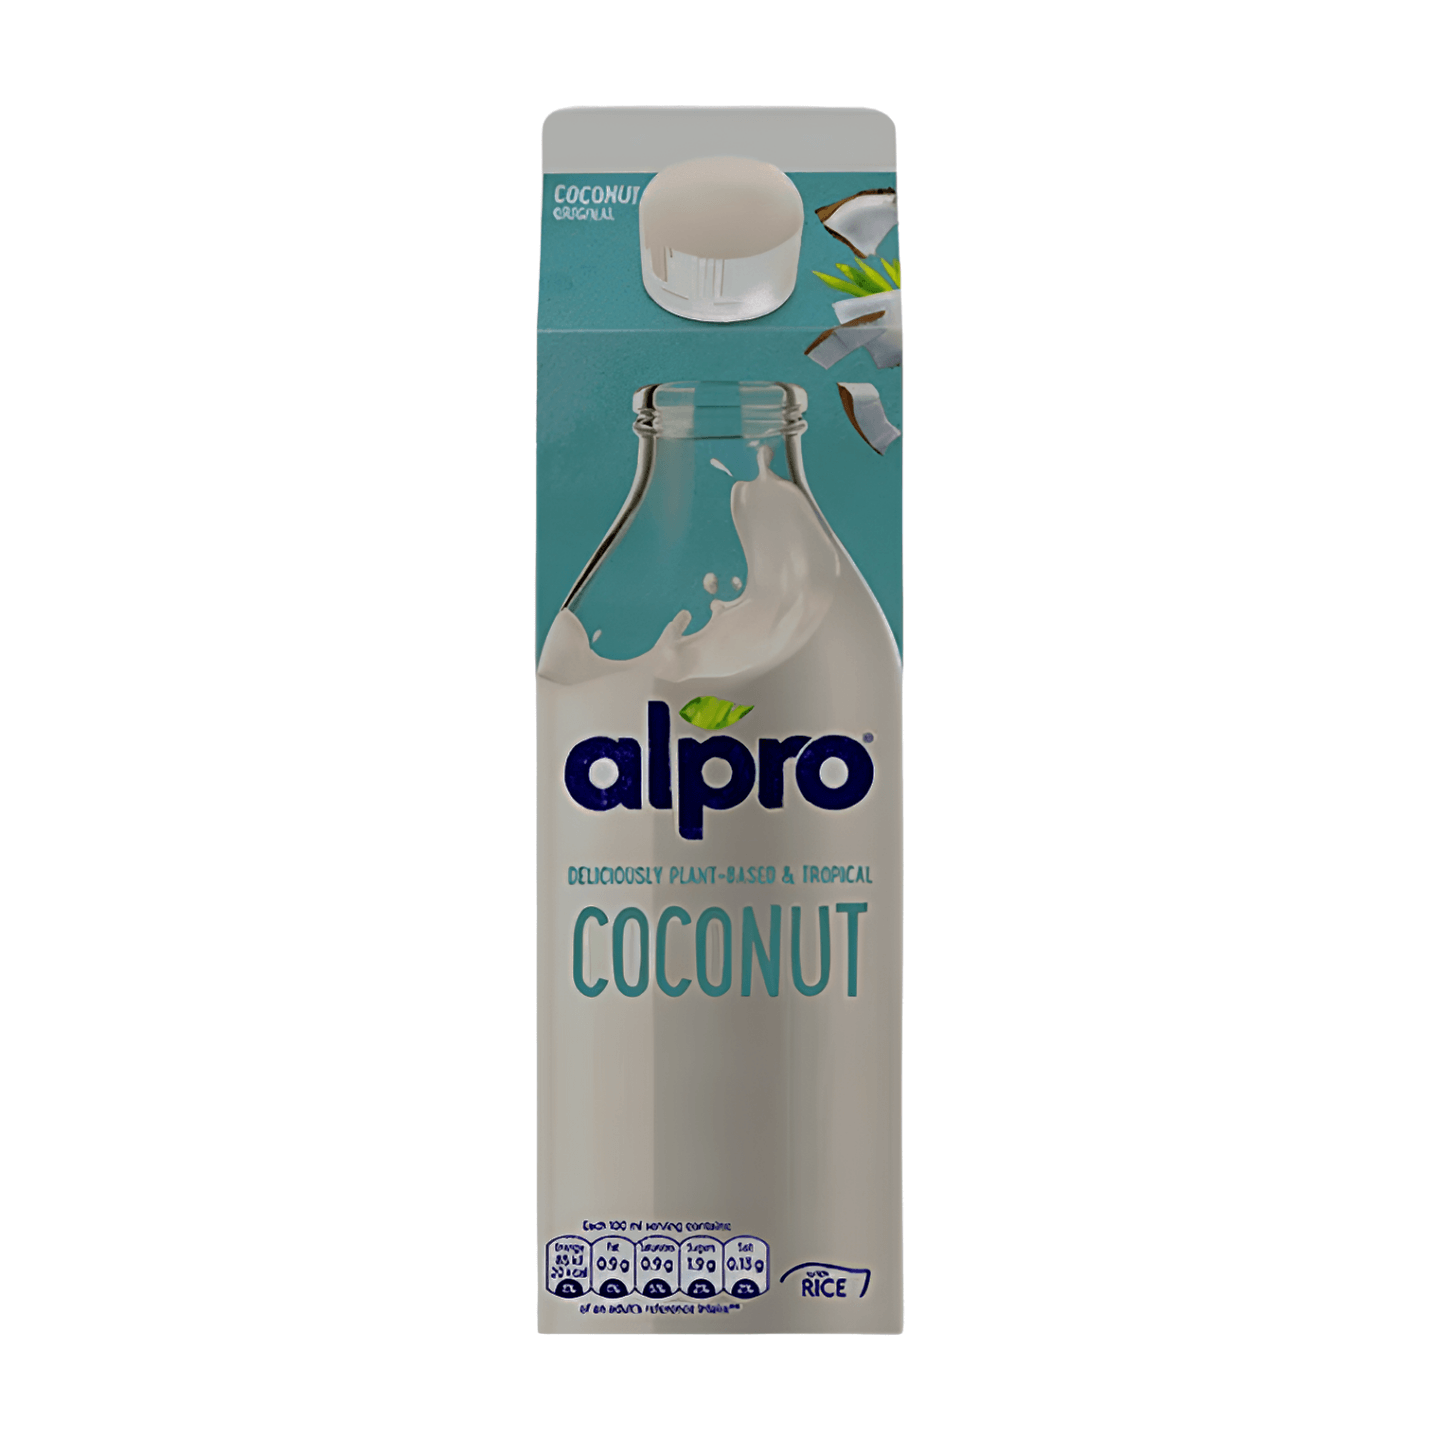 Alpro Coconut Original Chilled